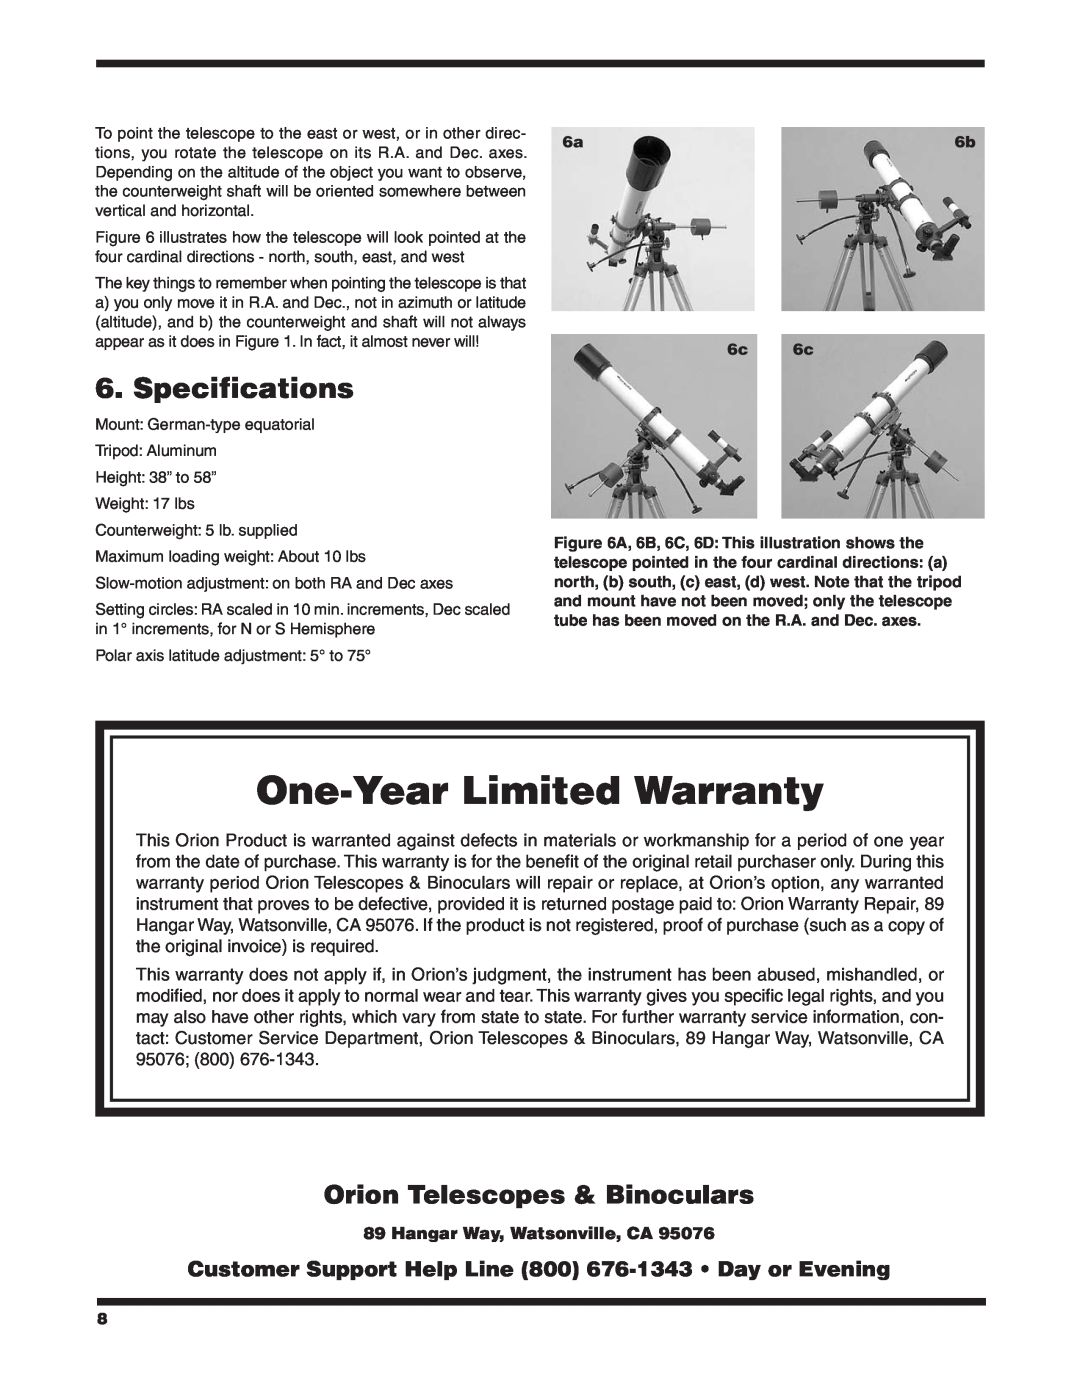 Orion 9828 Specifications, Orion Telescopes & Binoculars, One-YearLimited Warranty, Hangar Way, Watsonville, CA 